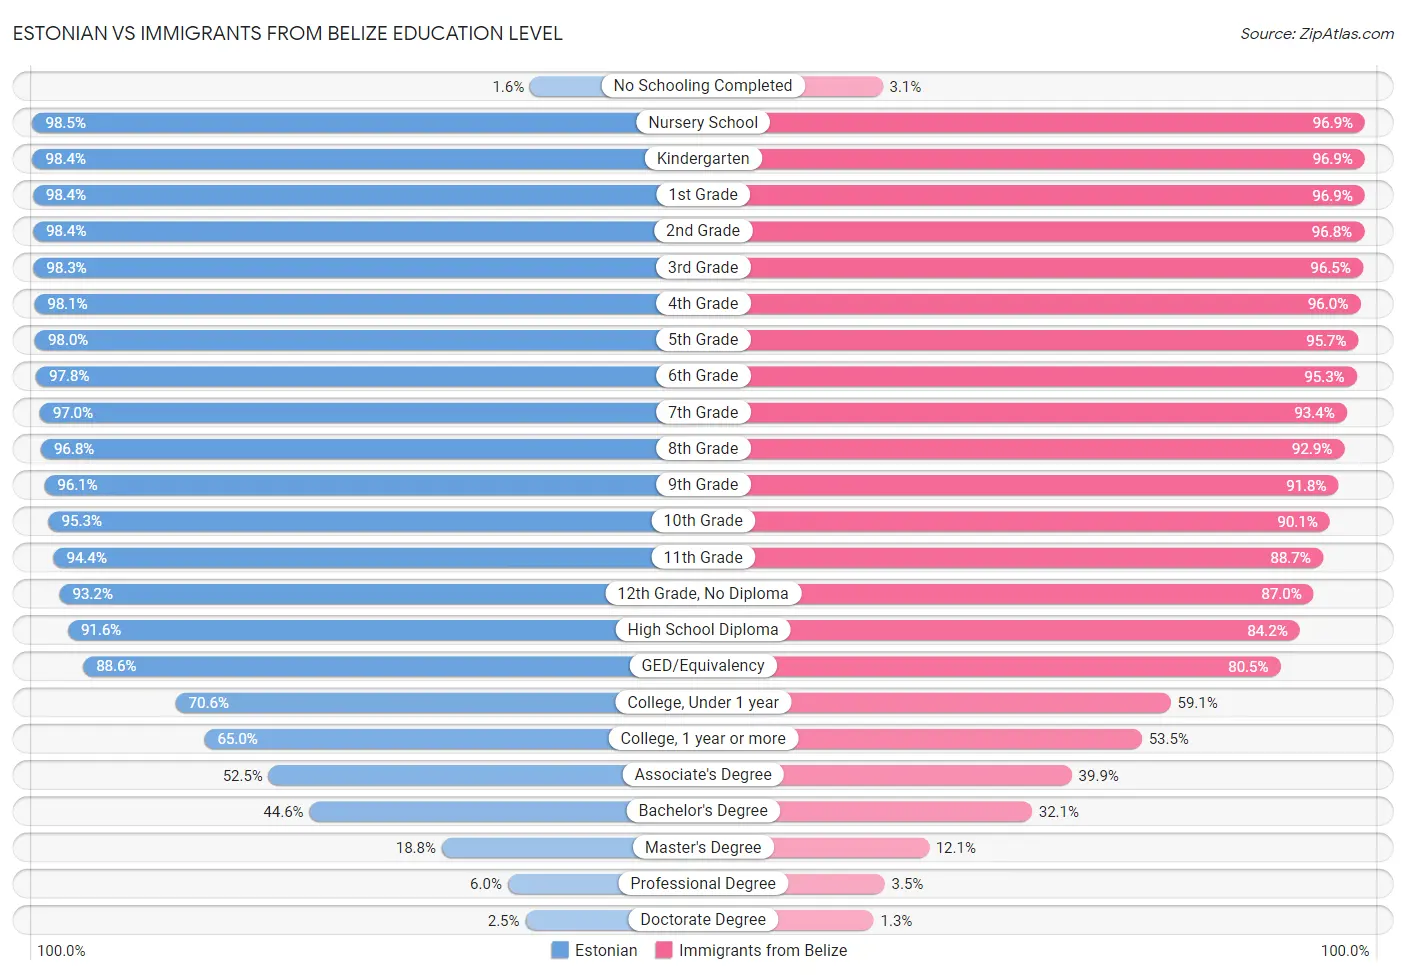 Estonian vs Immigrants from Belize Education Level